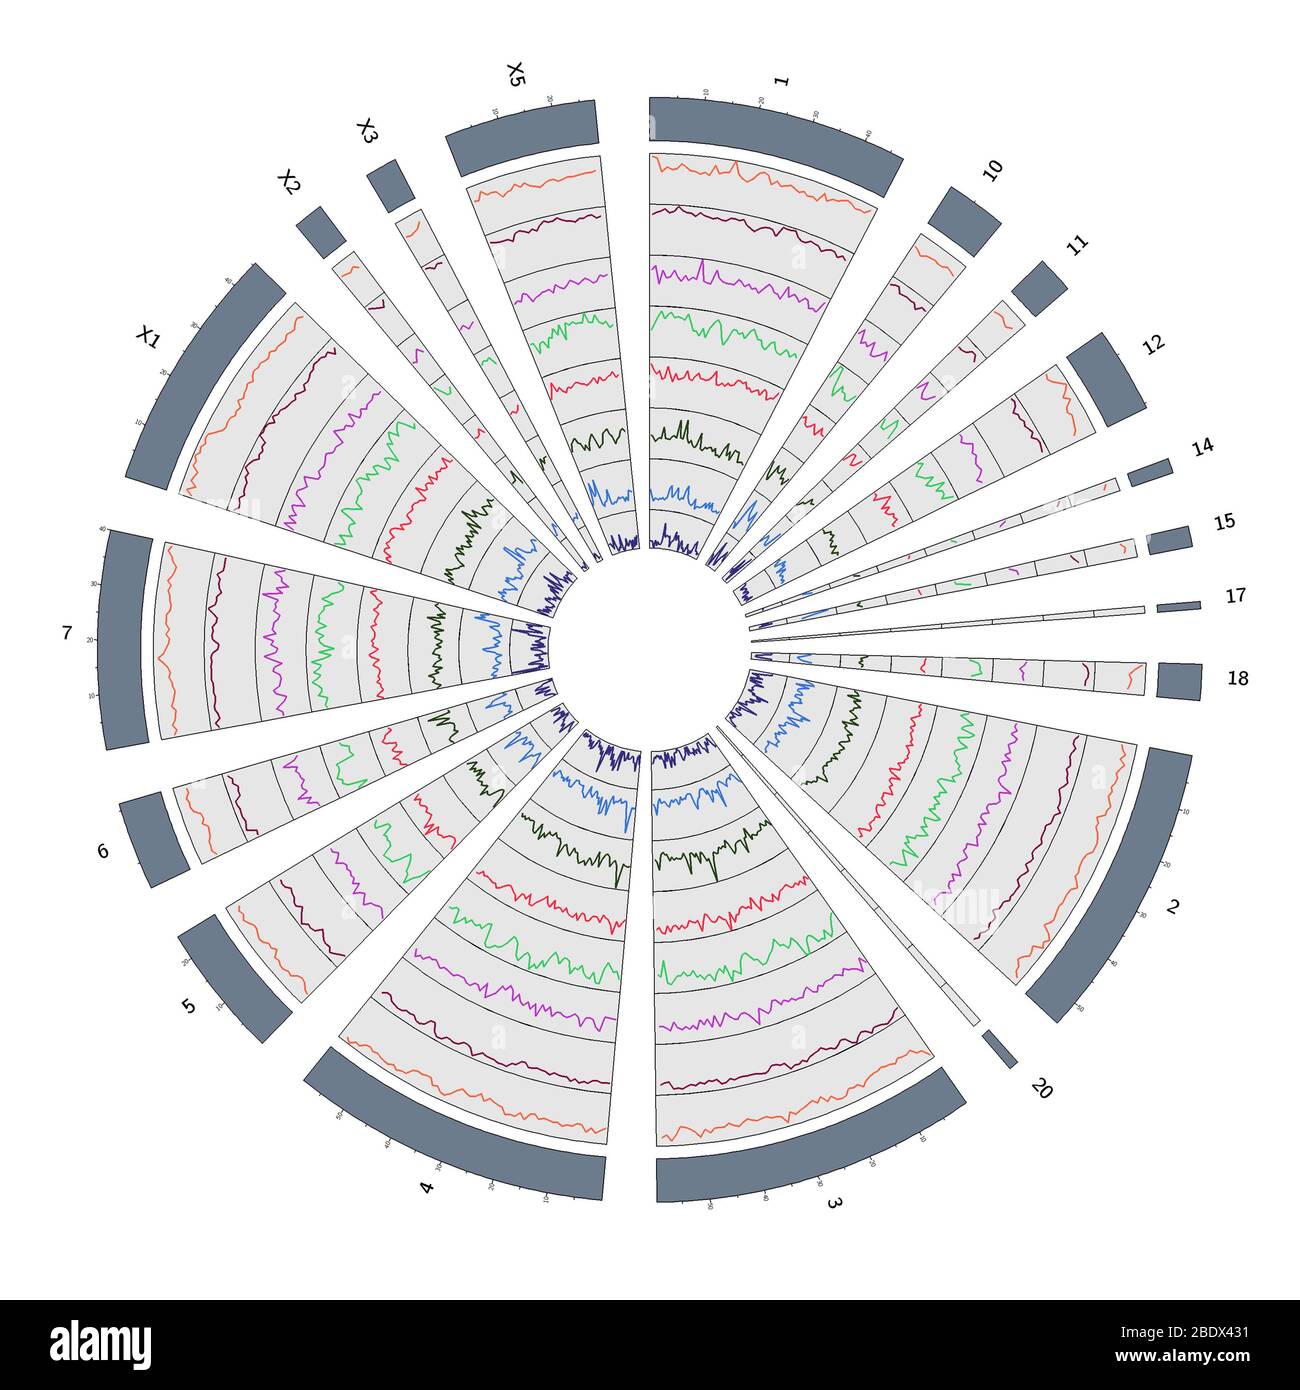 Circos, Circular Genome Map, Platypus Stock Photo